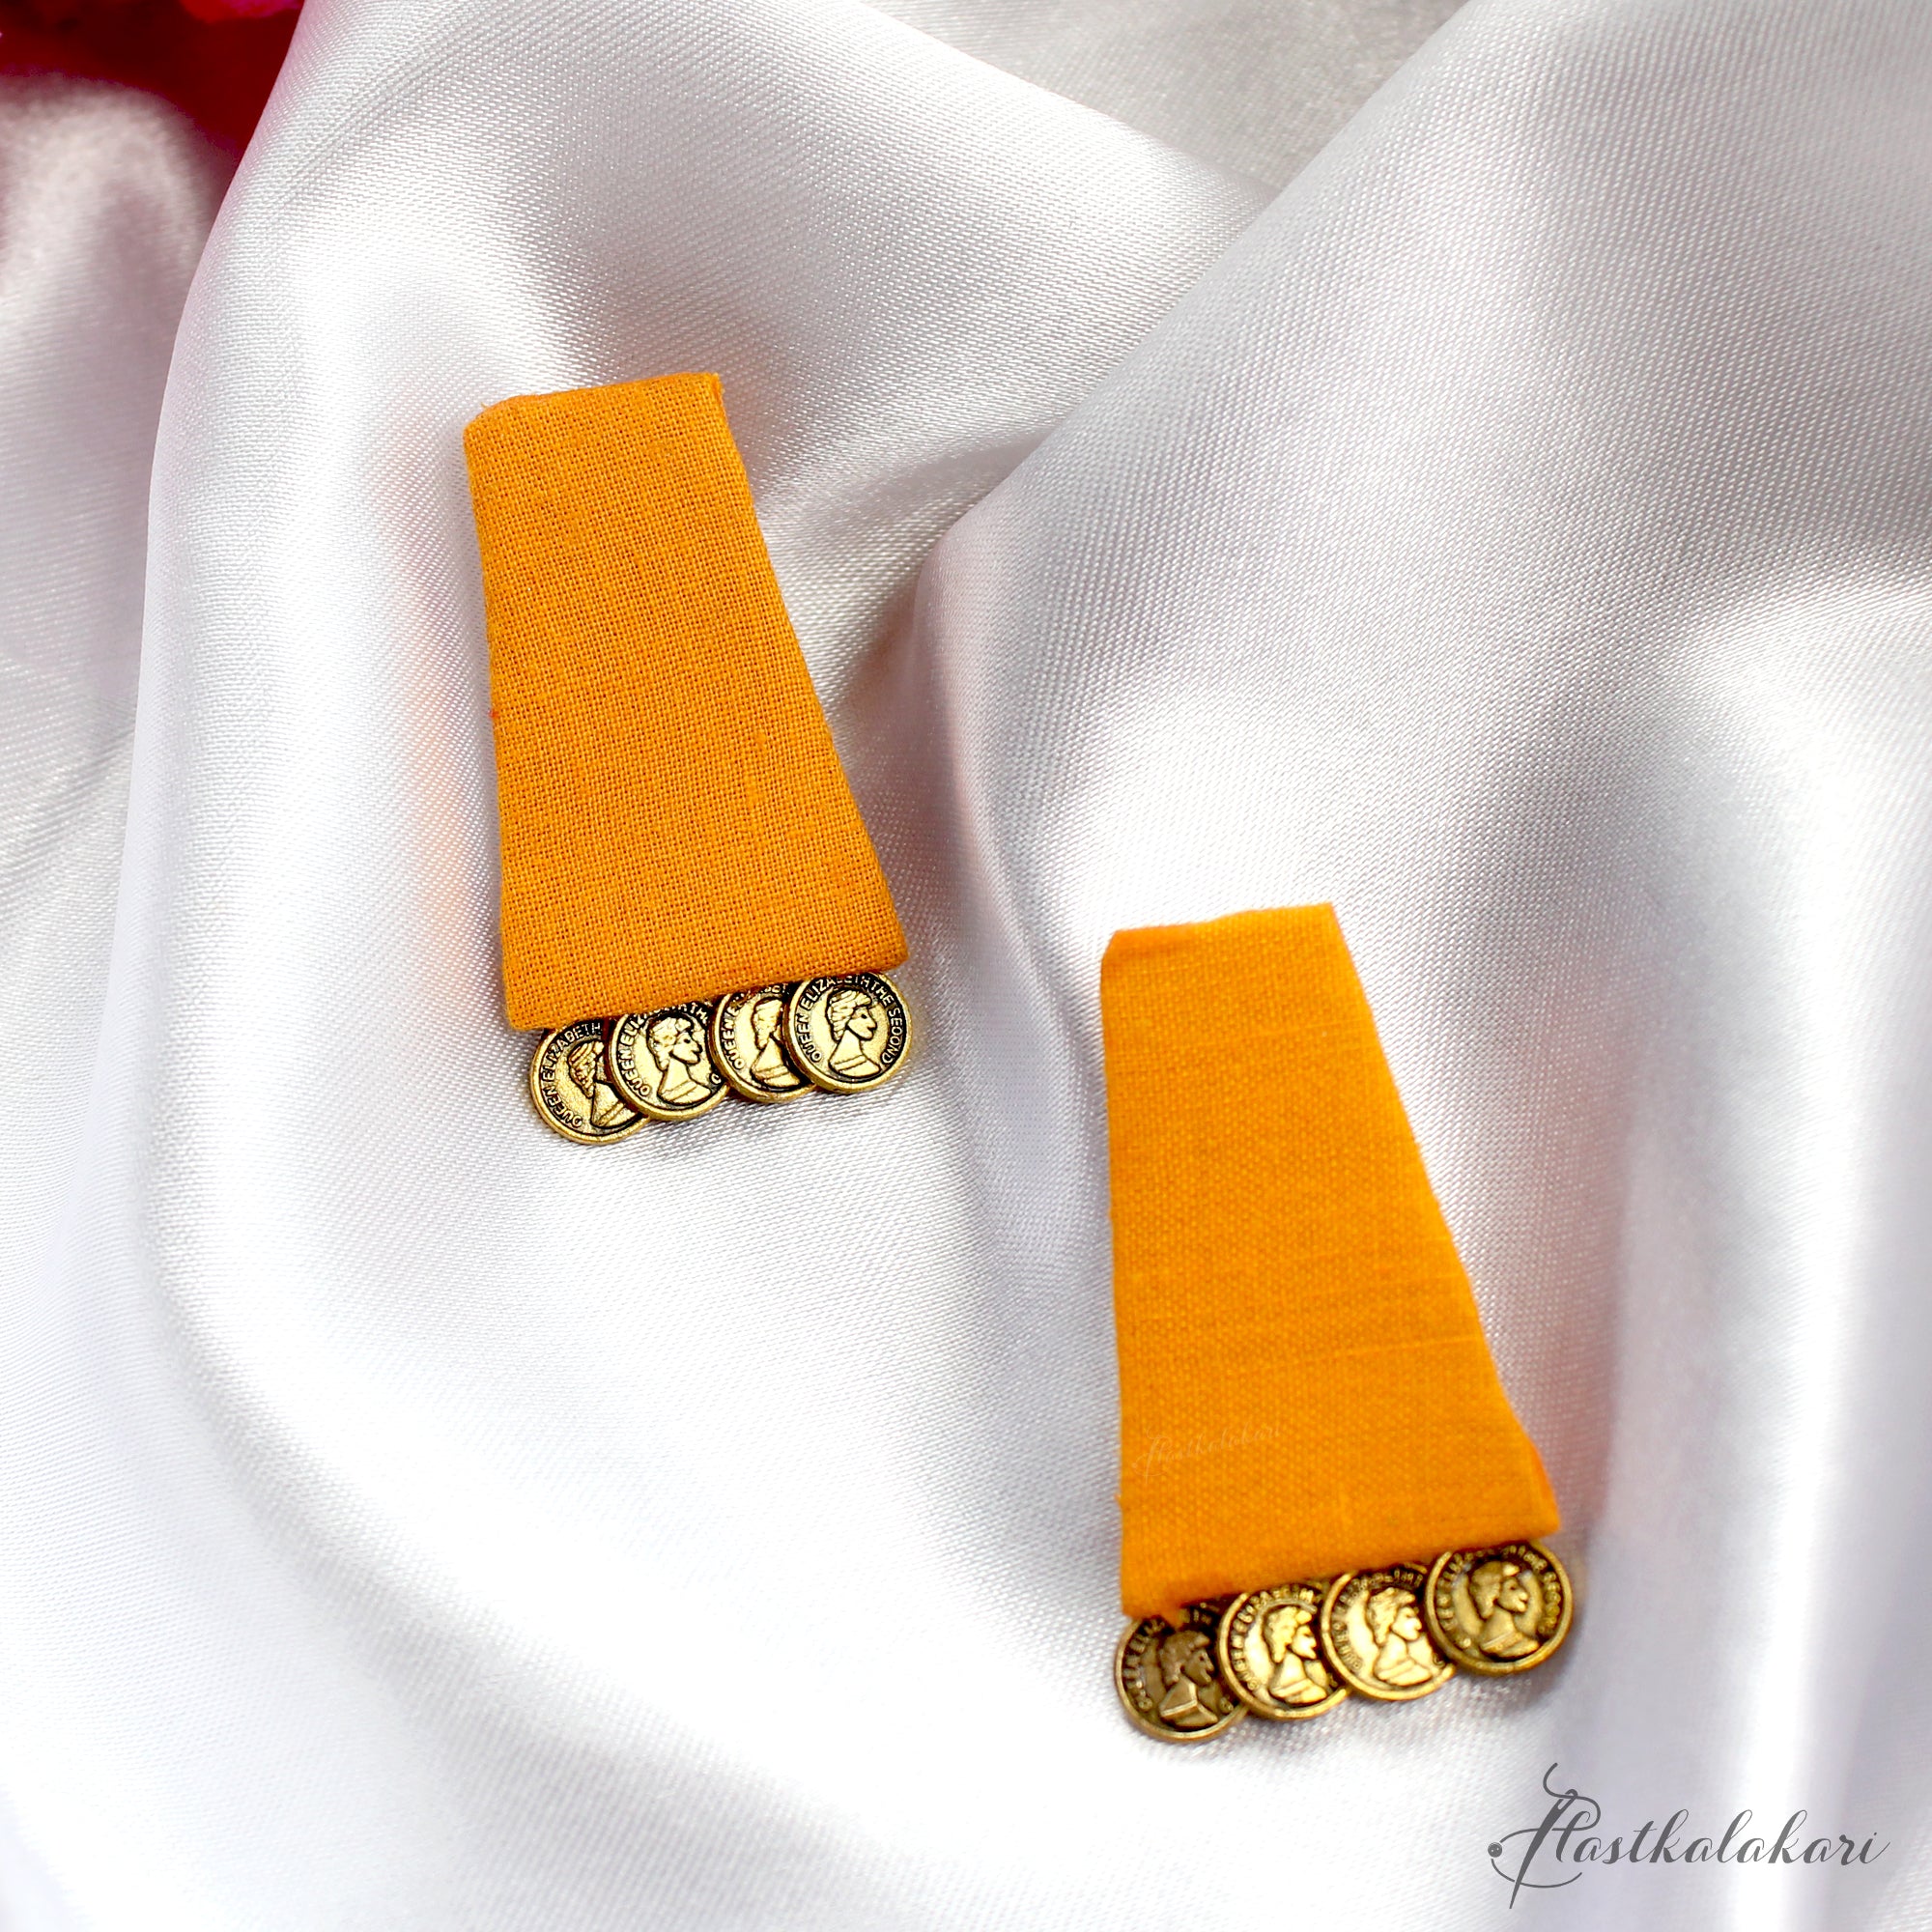 Hastkalakari Handmade Elegant Geometrical Yellow Fabric Stud Earrings With Antique Golden Coins For Women